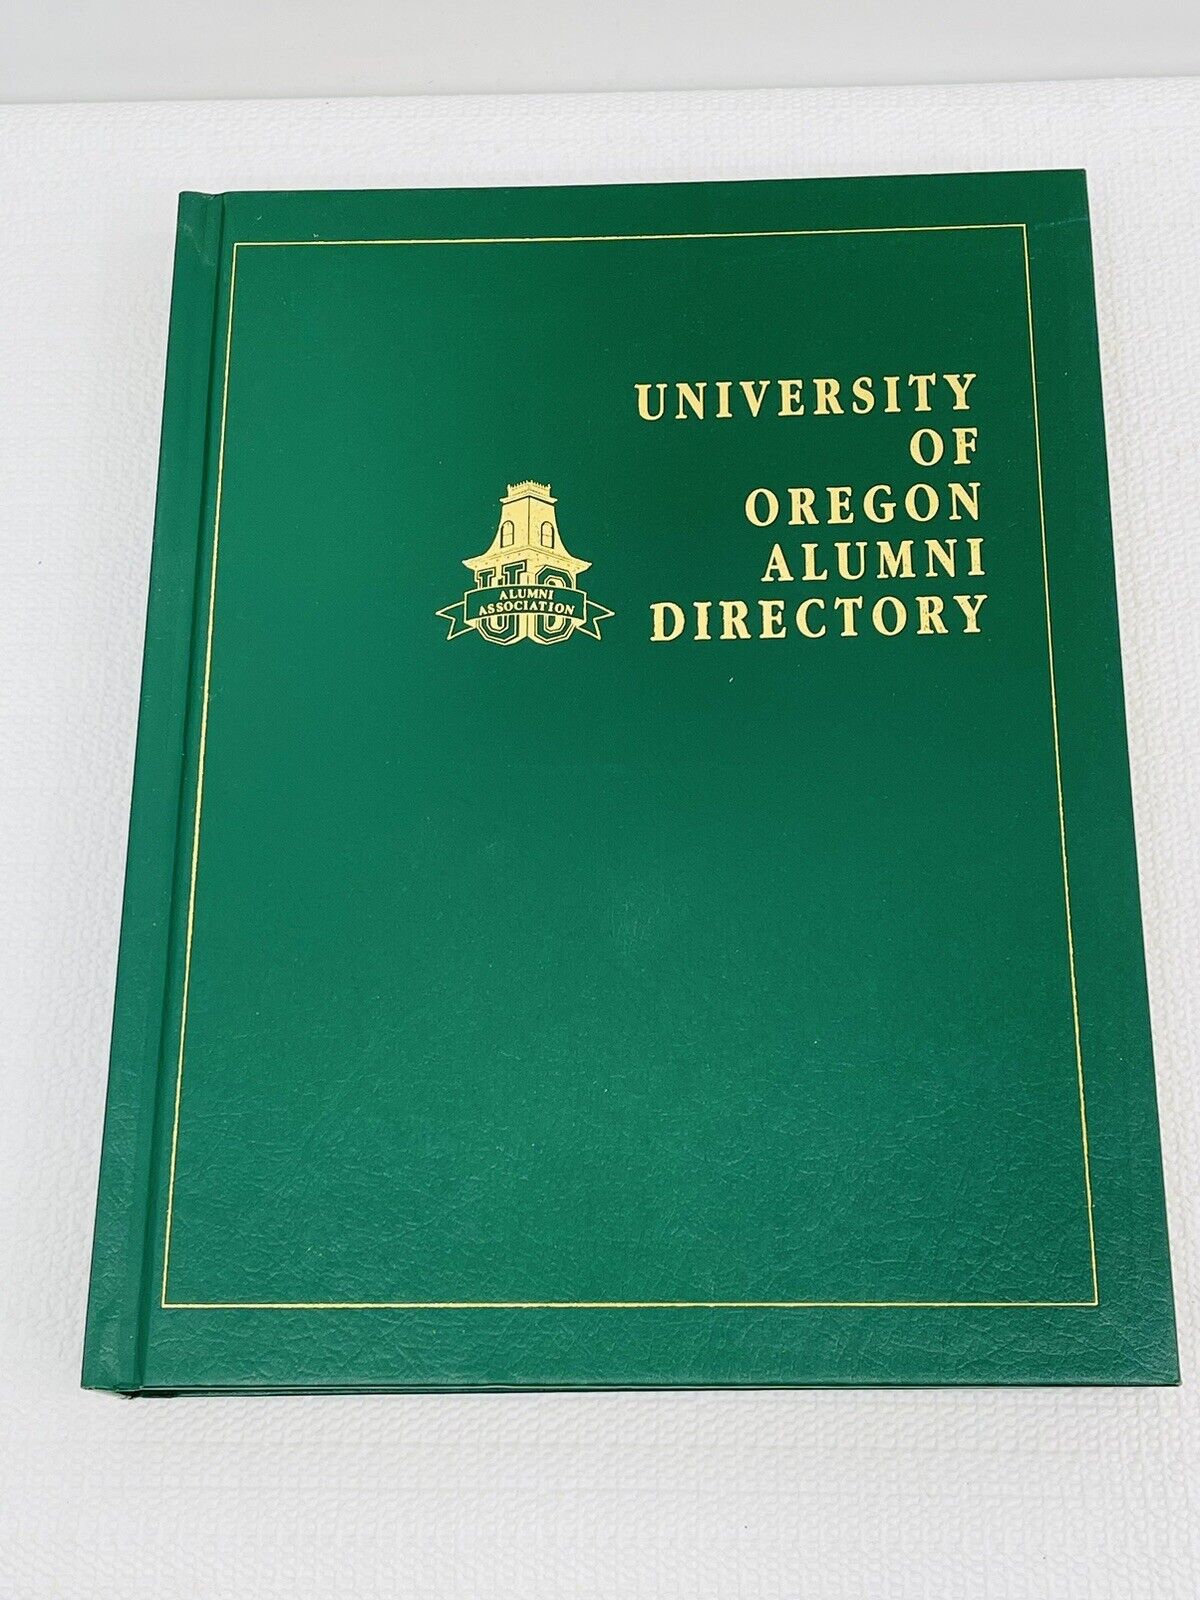 1990 University of Oregon Alumni Directory MINT CONDITION